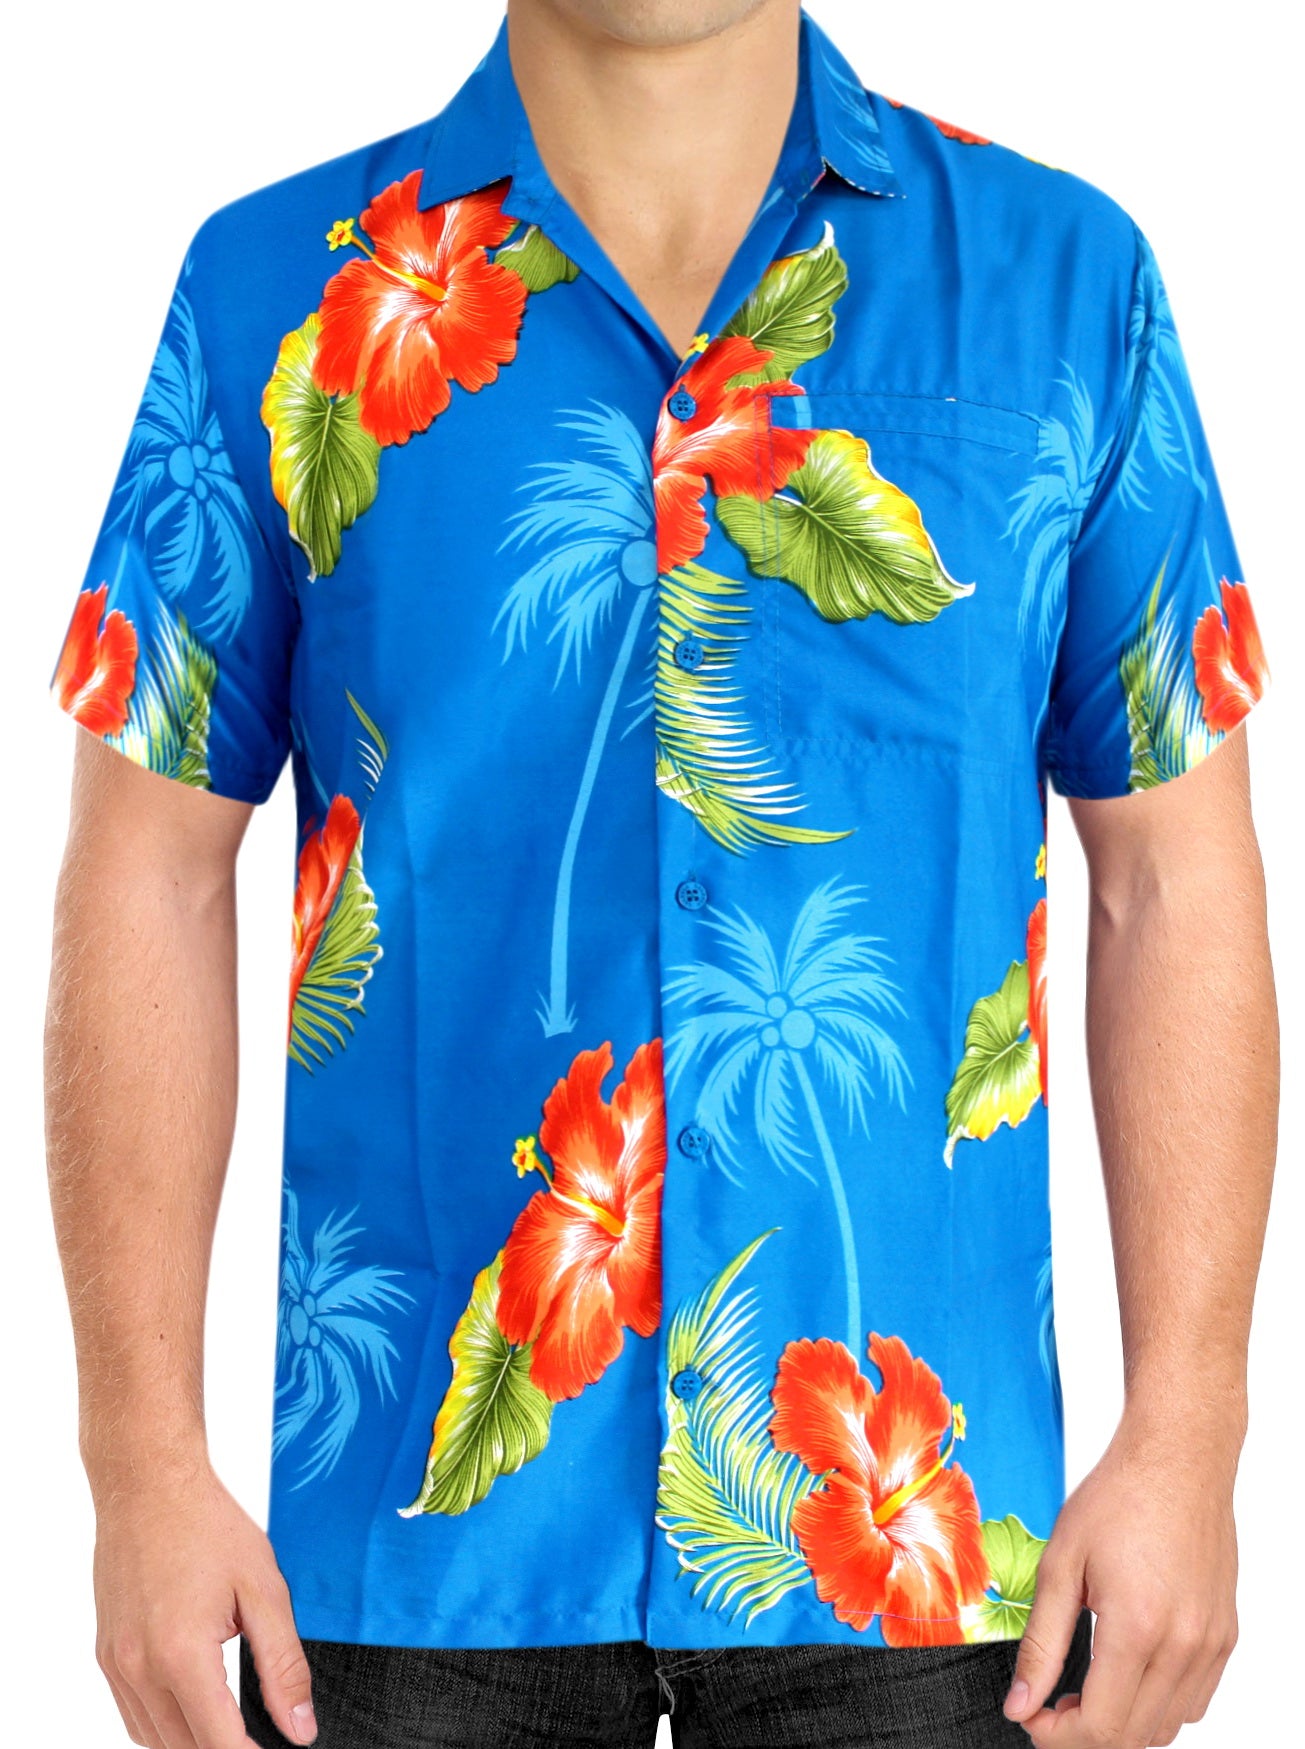 LA LEELA Men's Casual Beach hawaiian Shirt Aloha Tropical Beach